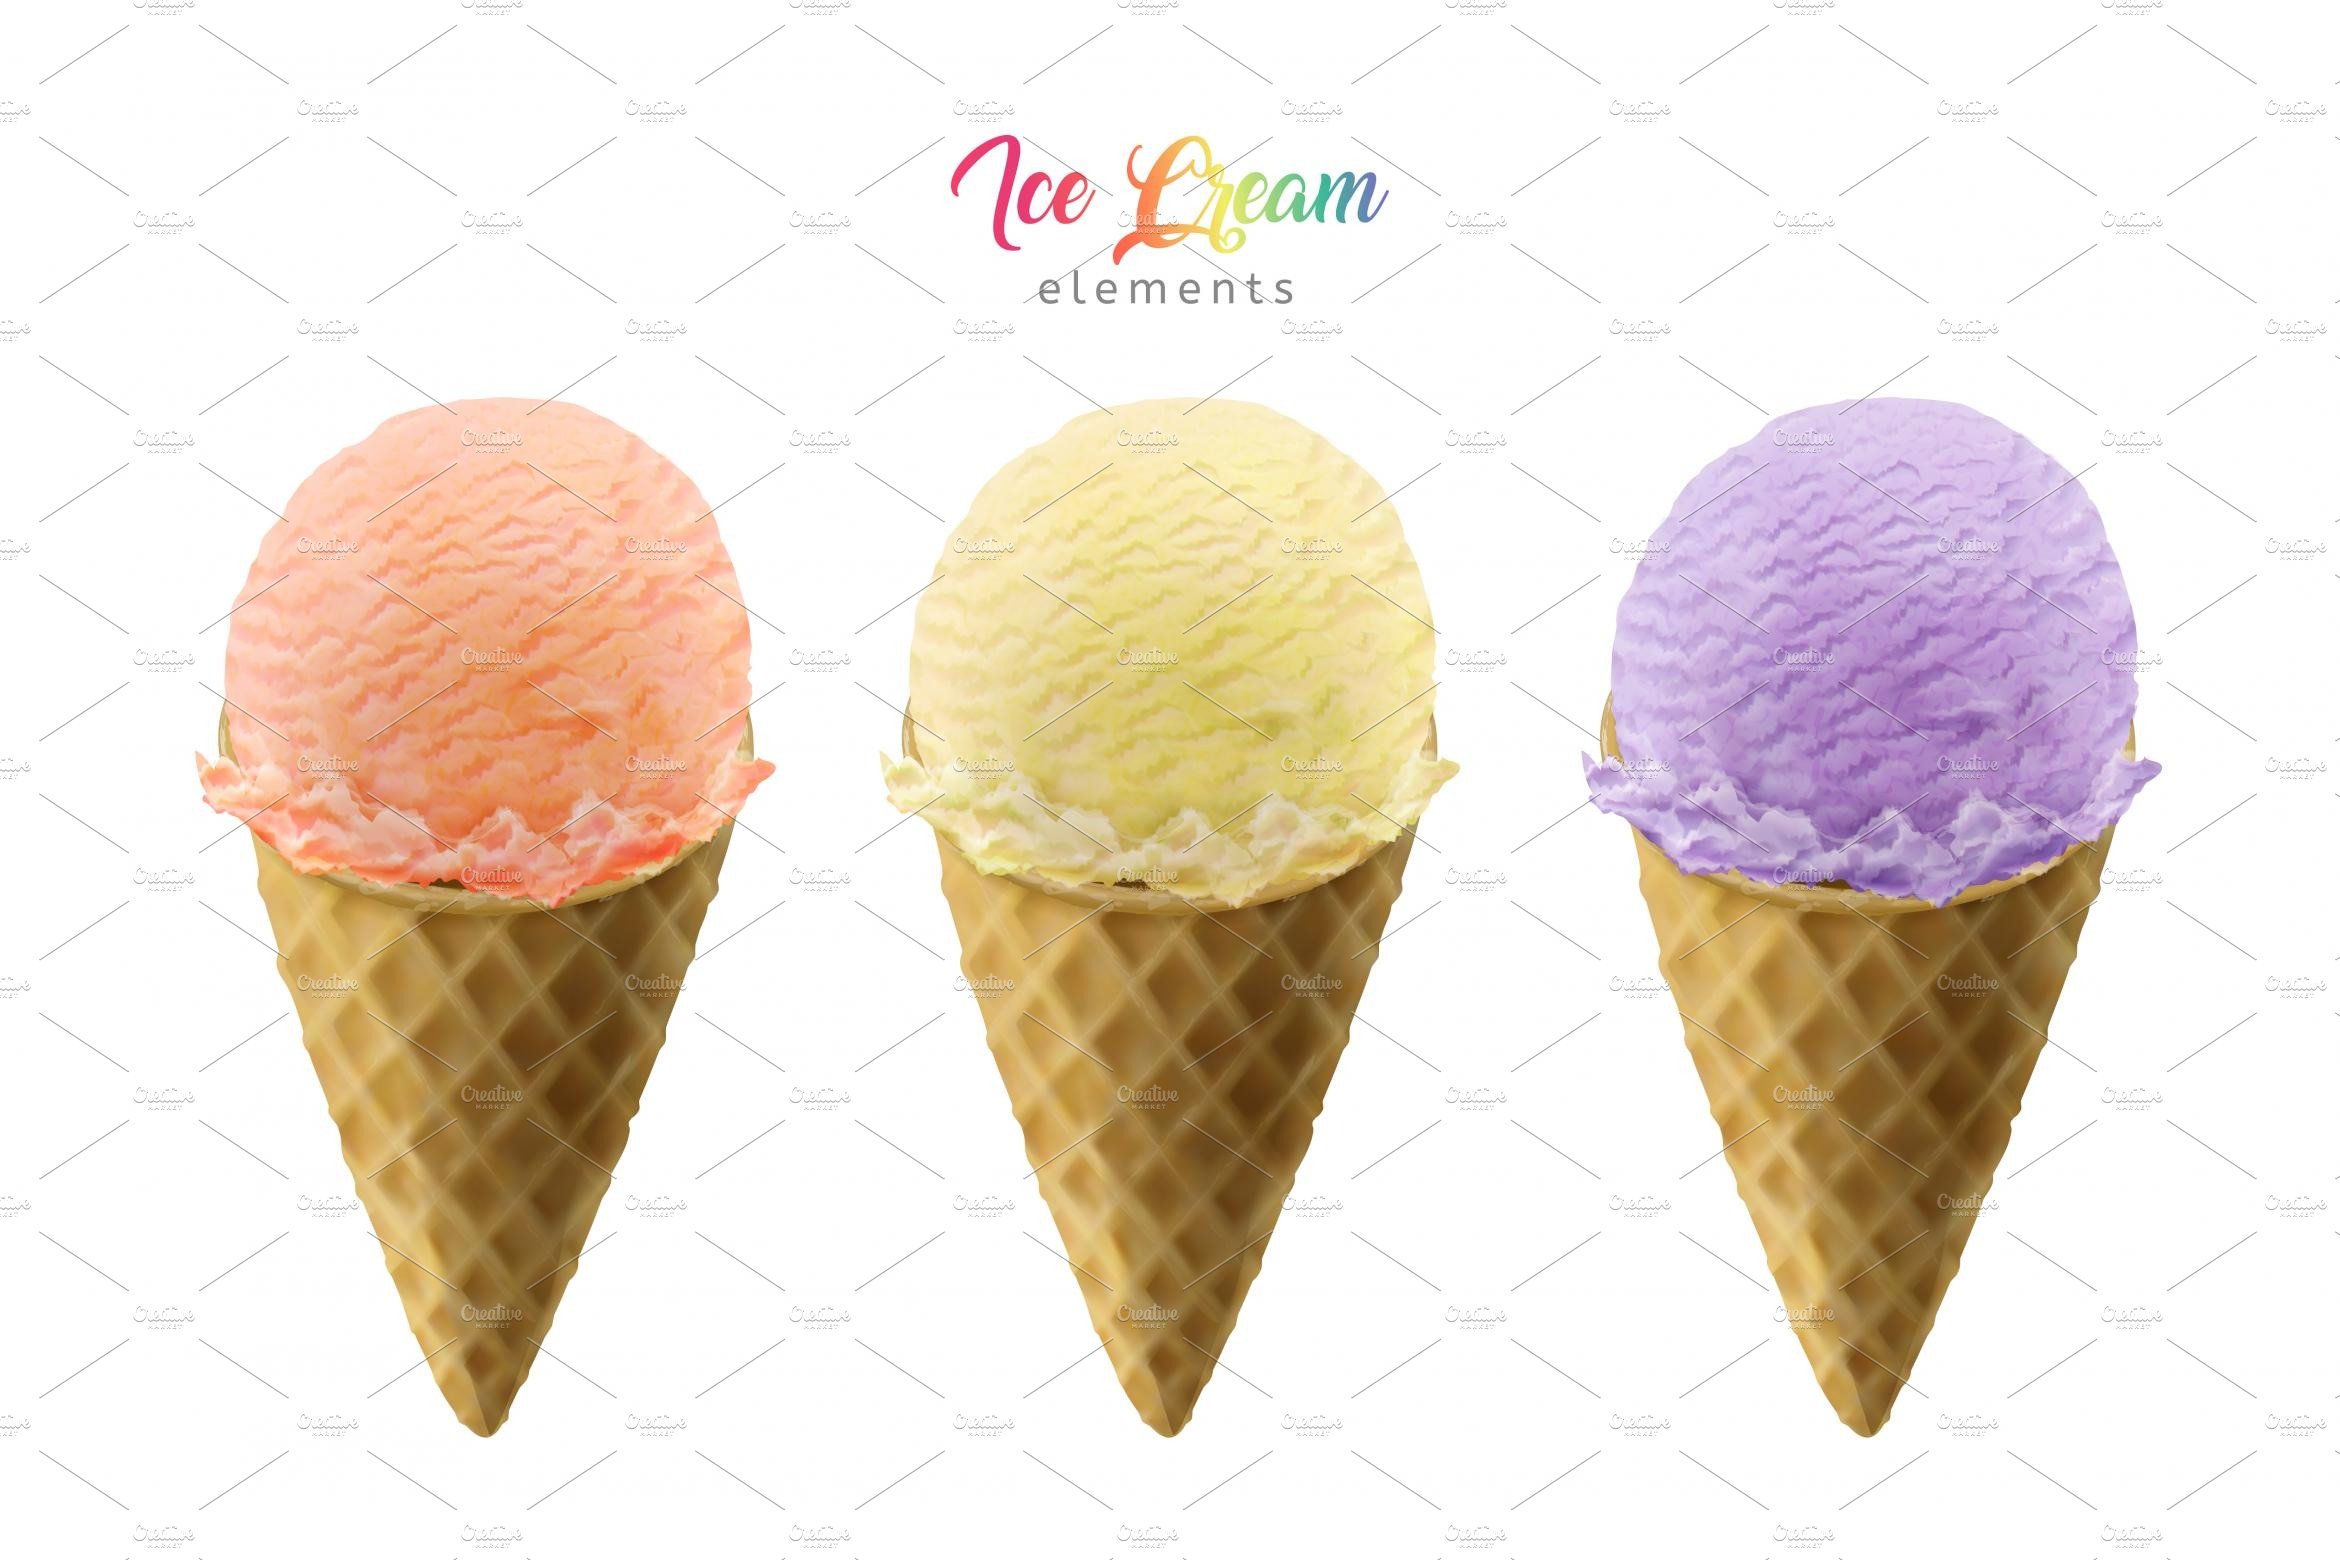 Colorful ice cream cones cover image.